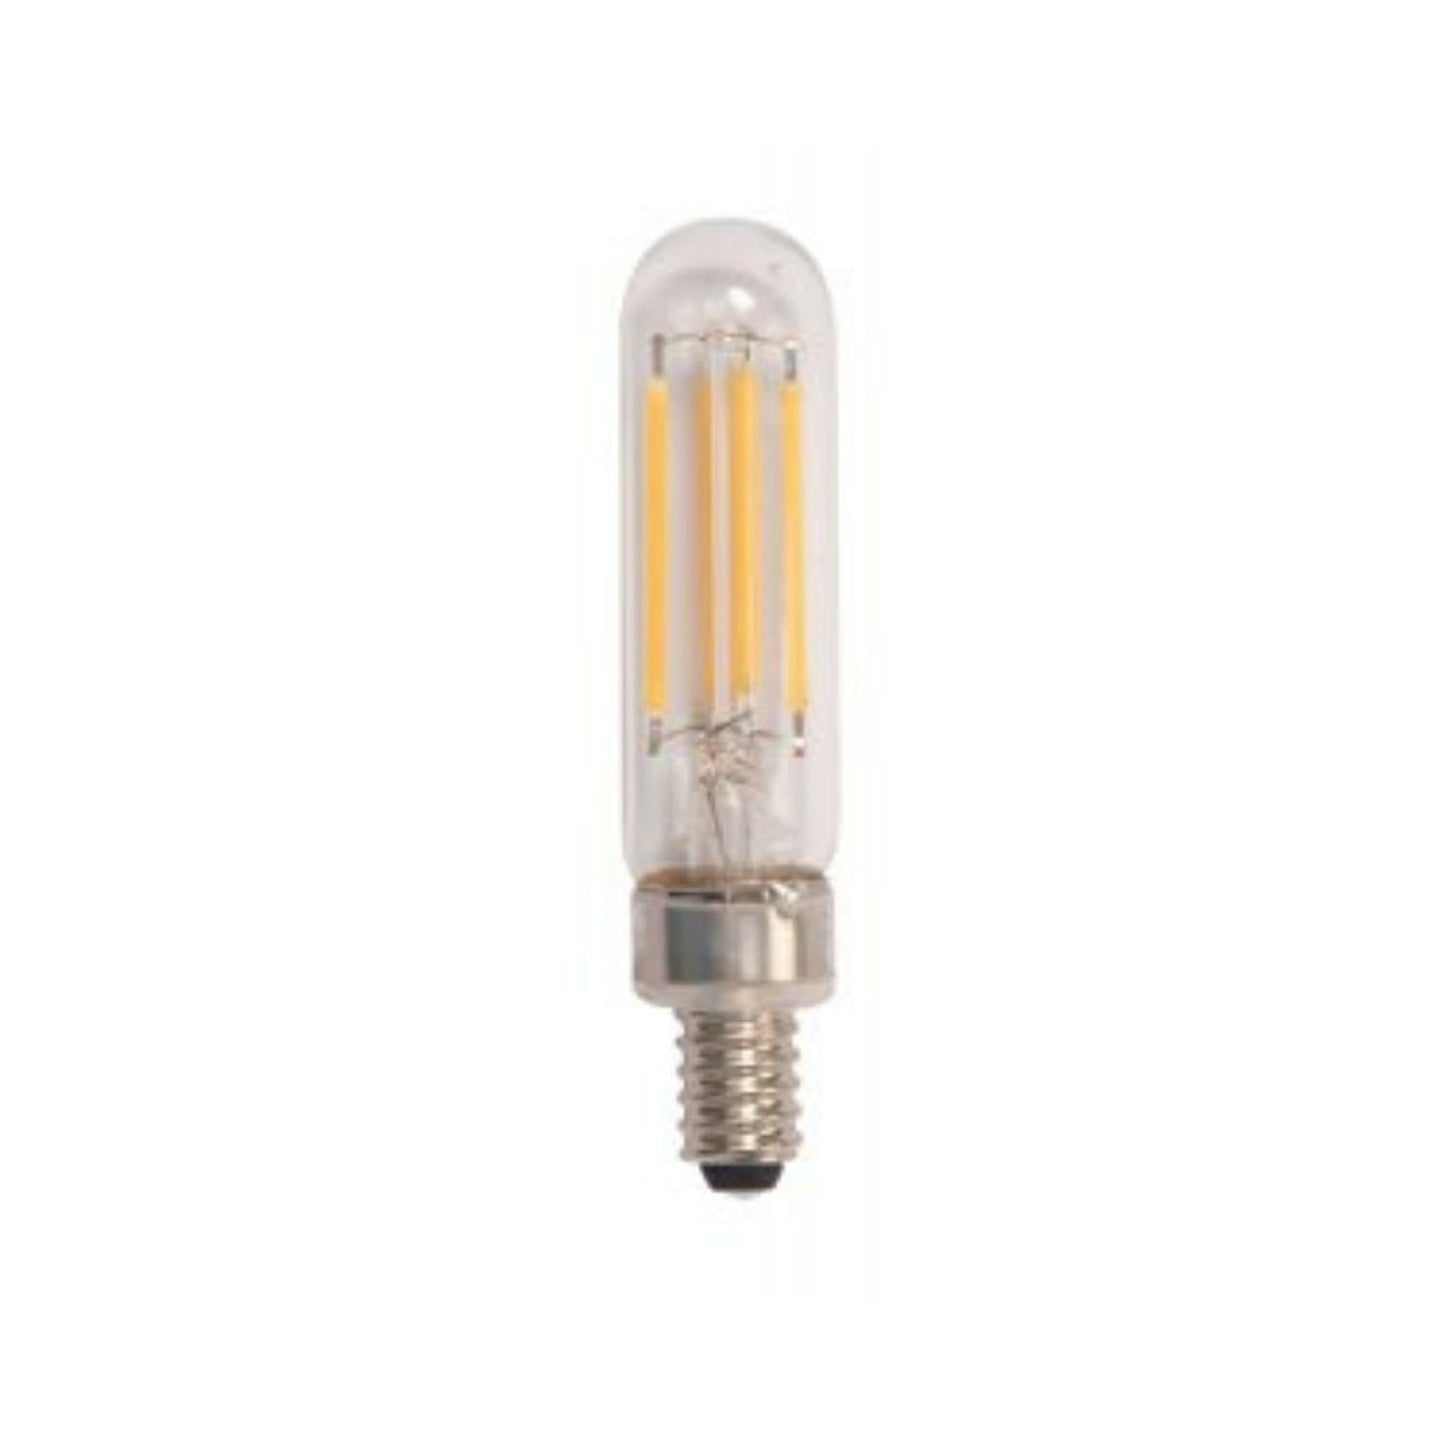 Craftmade 4.5-Watt T6 Clear Finish, E26 Medium Base, 3.4" M.O.L., 2700K Warm White LED Light Bulb